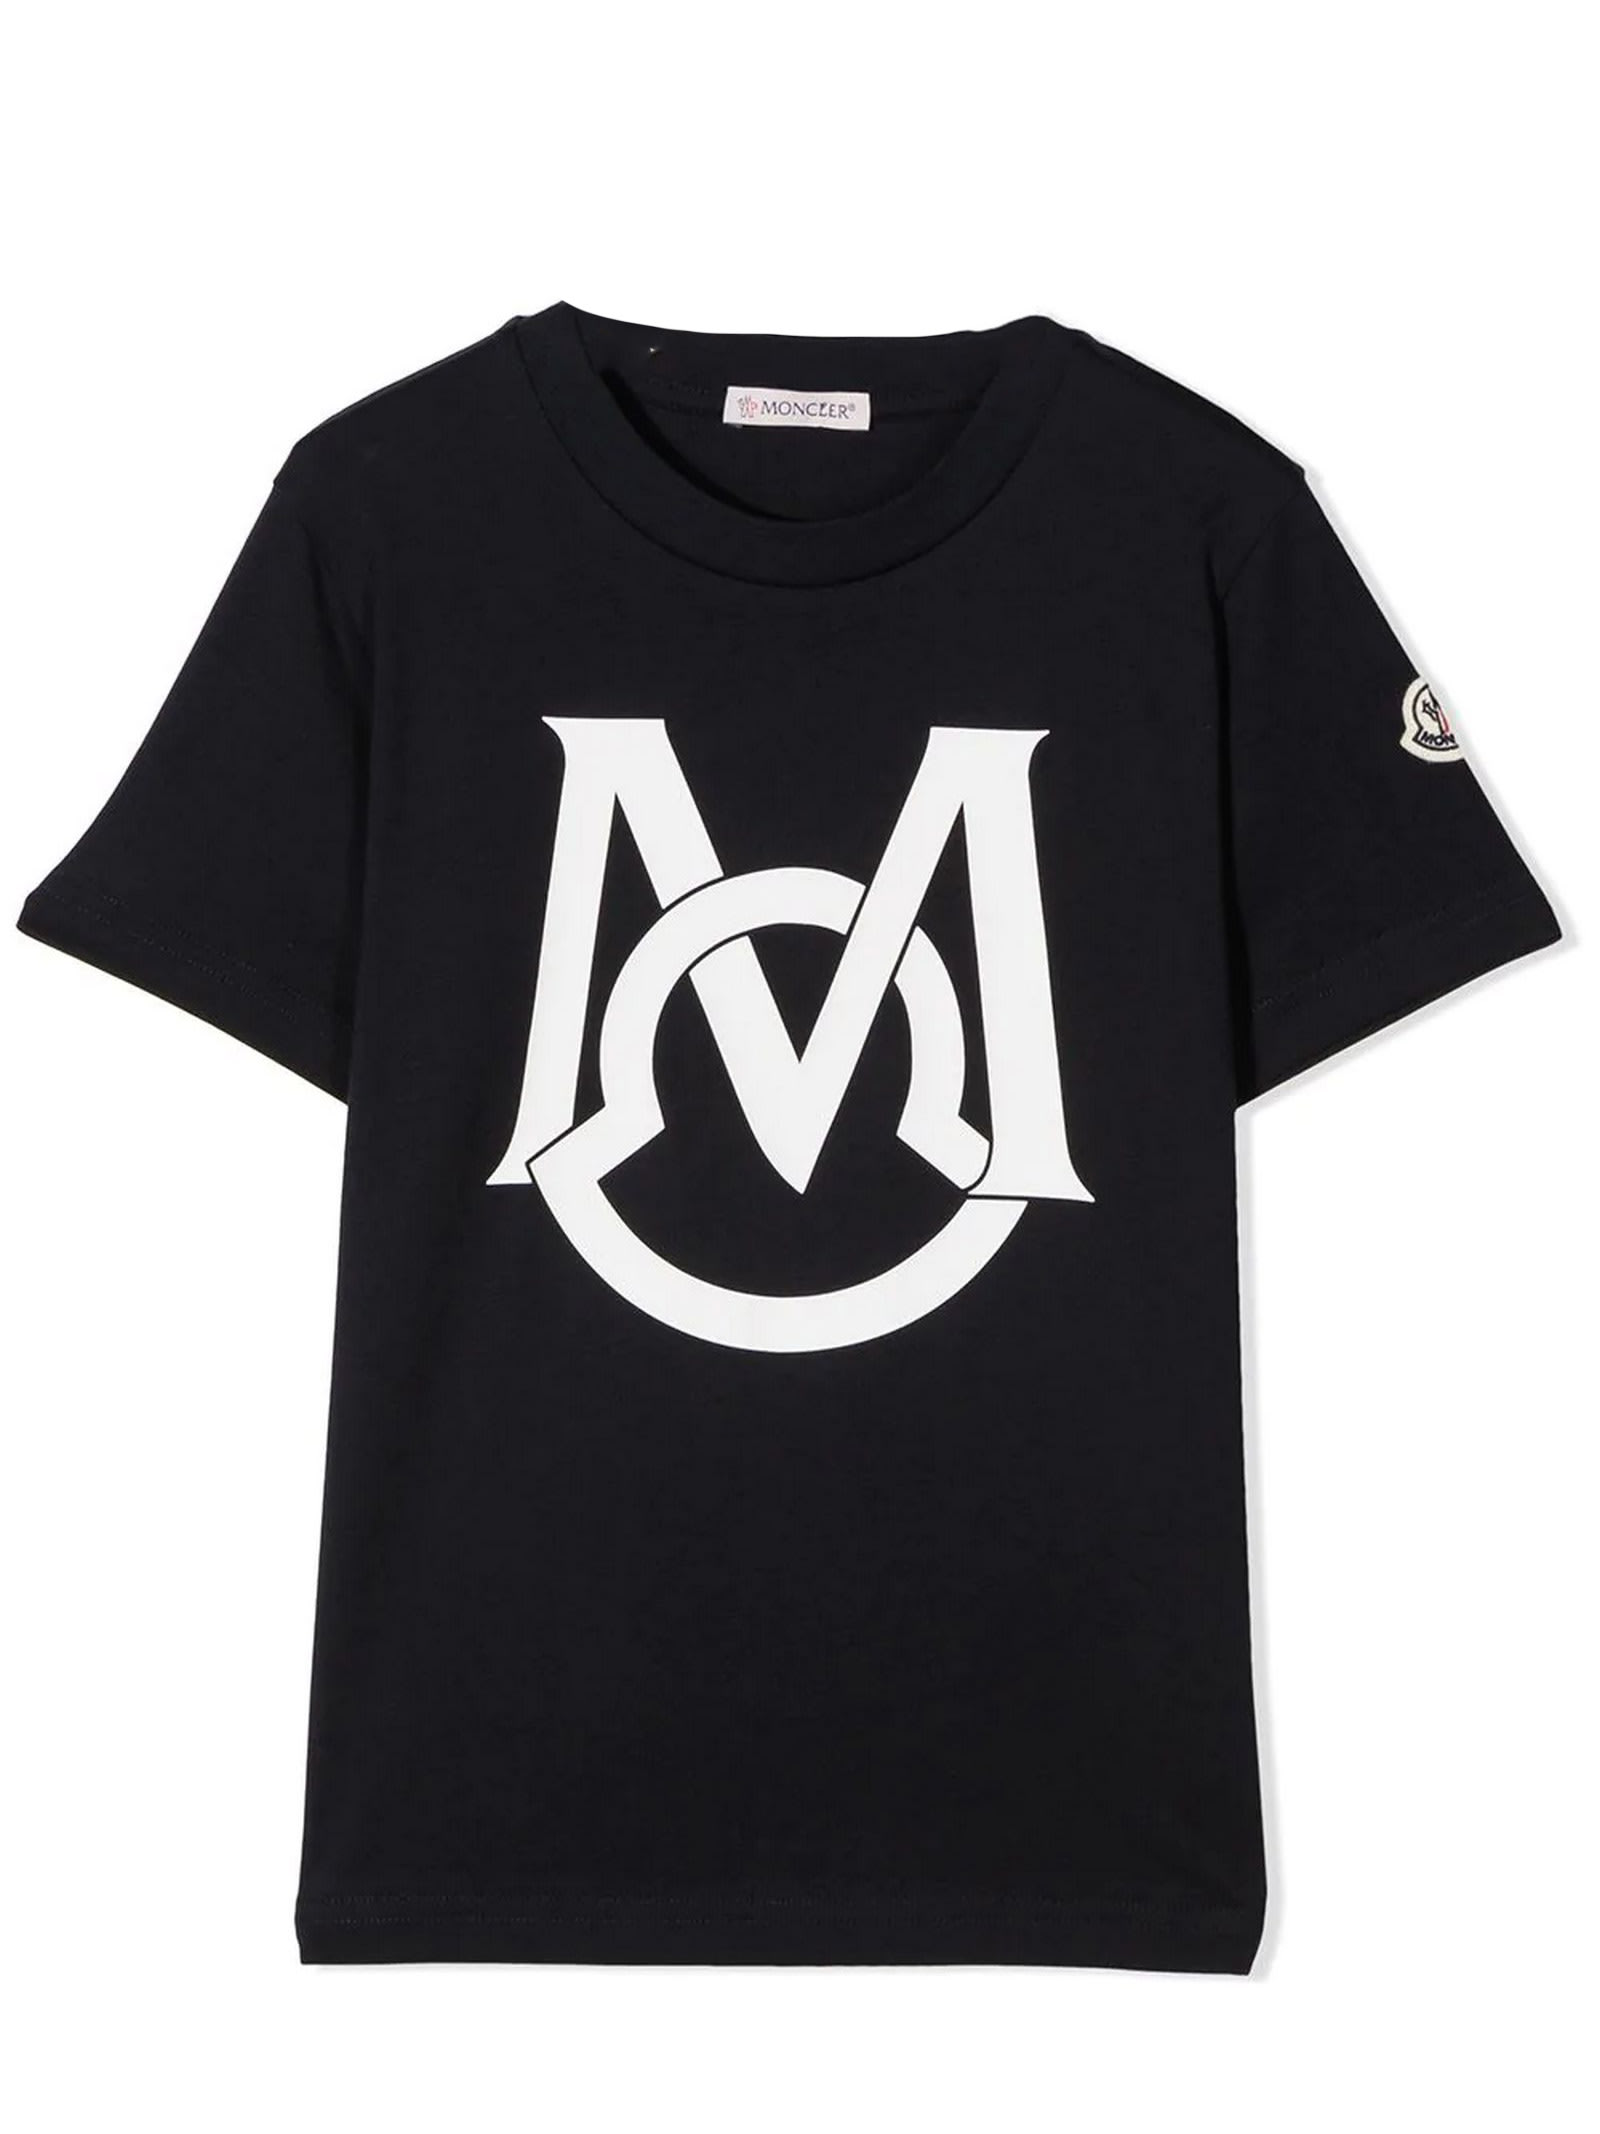 Moncler Navy Blue Cotton T-shirt